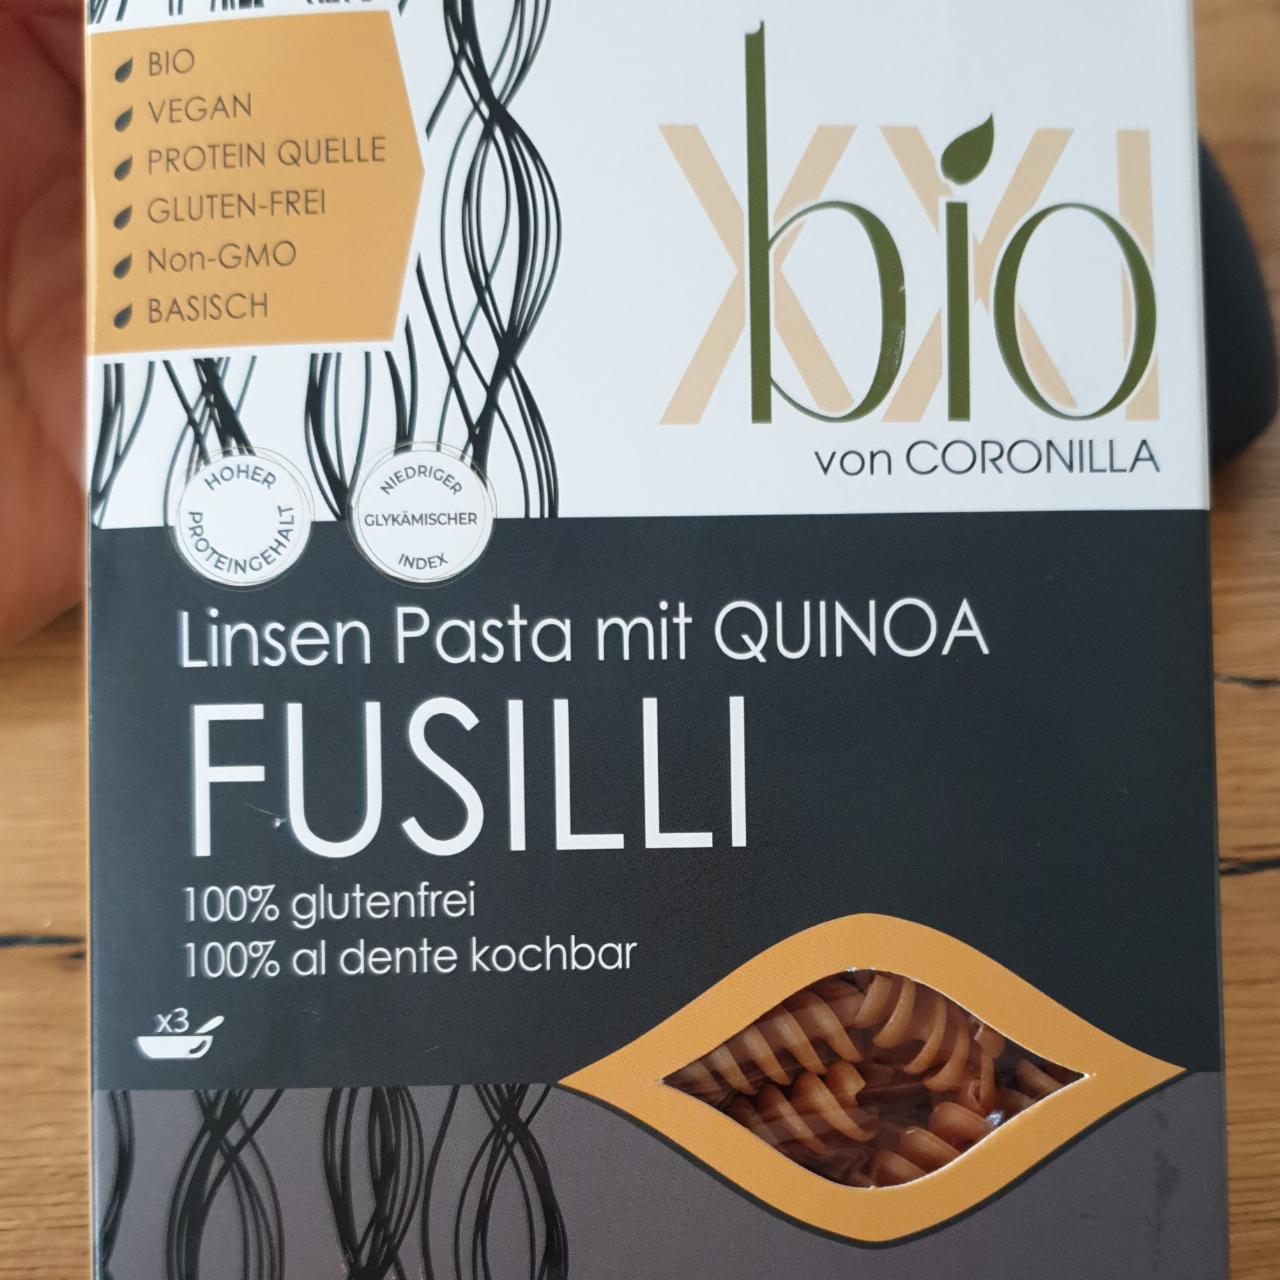 Fotografie - Linsen pasta mit quinoa Fusilli Coronilla